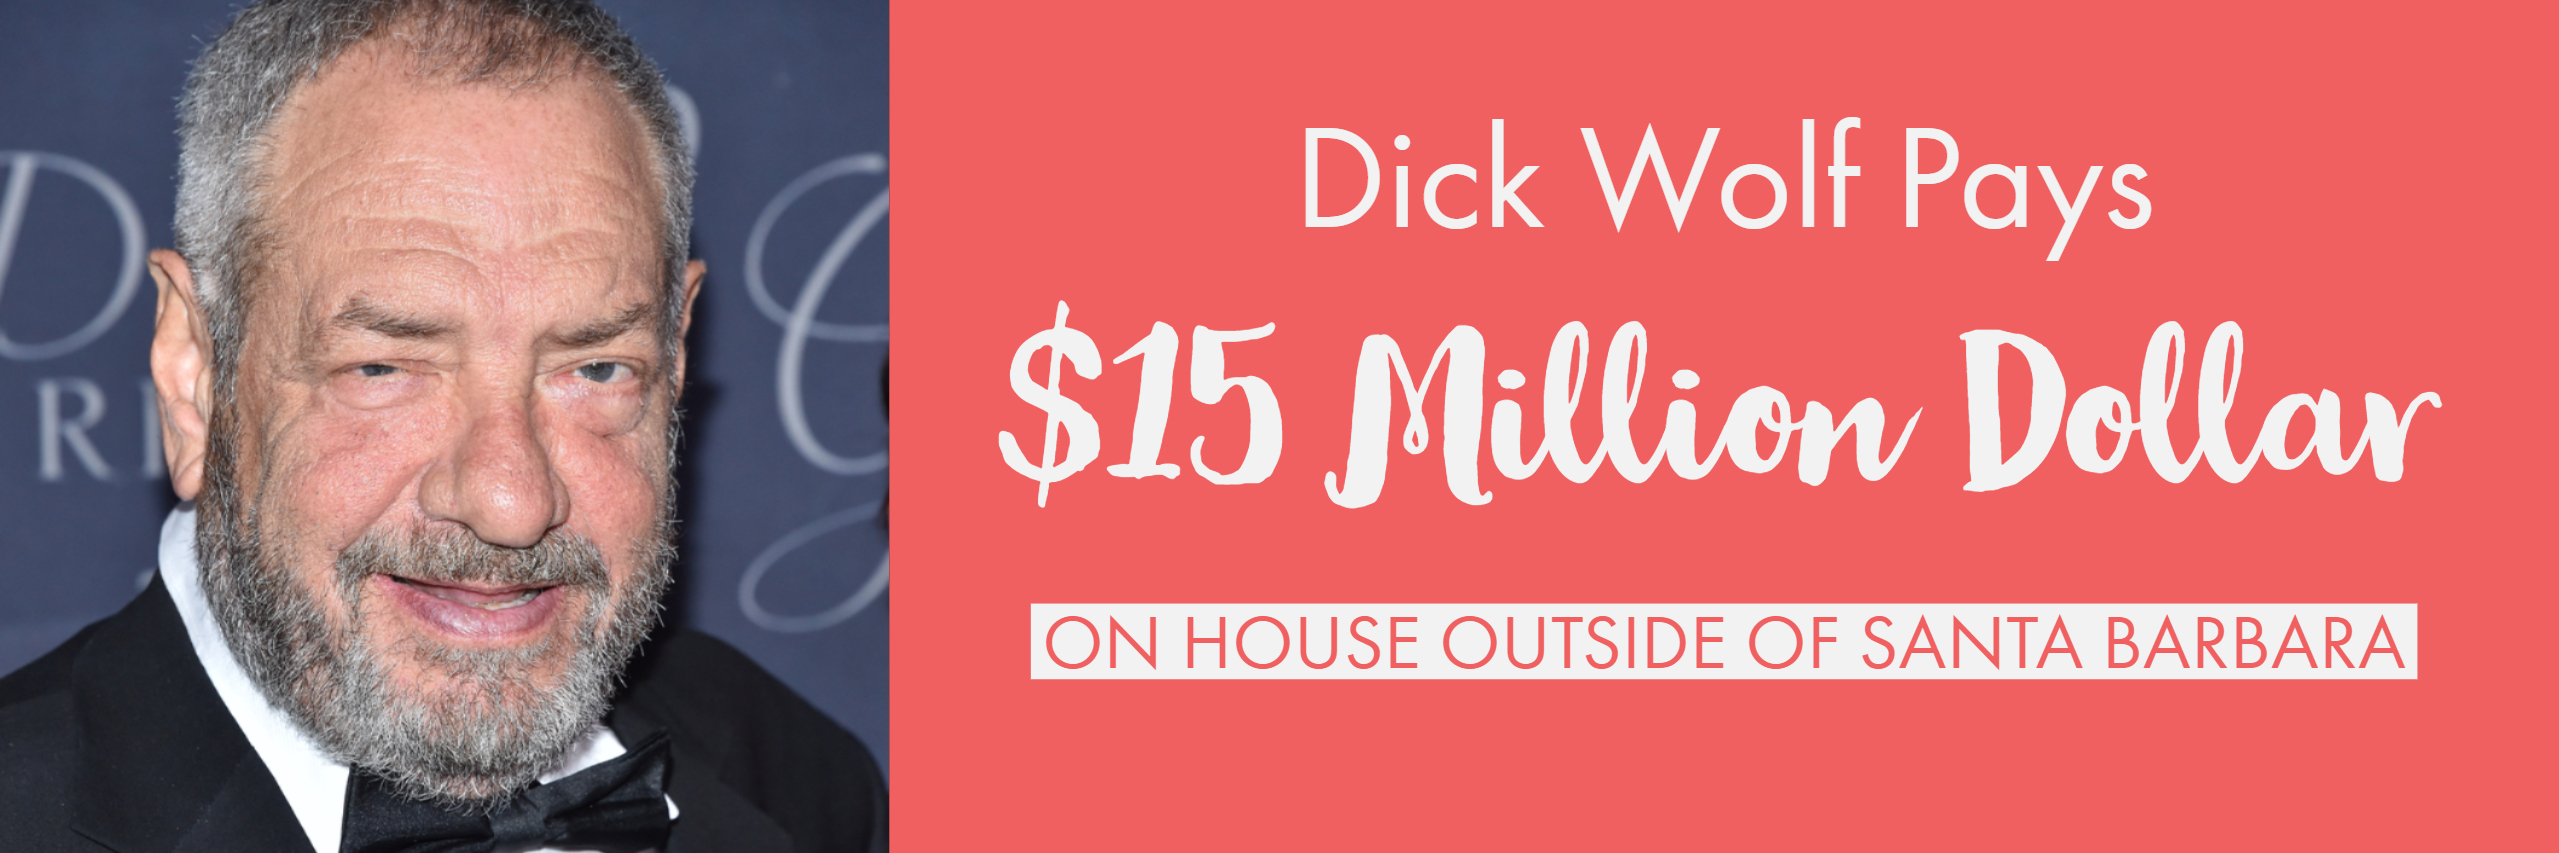 Dick Wolf Pays $15 Million on House outside of Santa Barbara